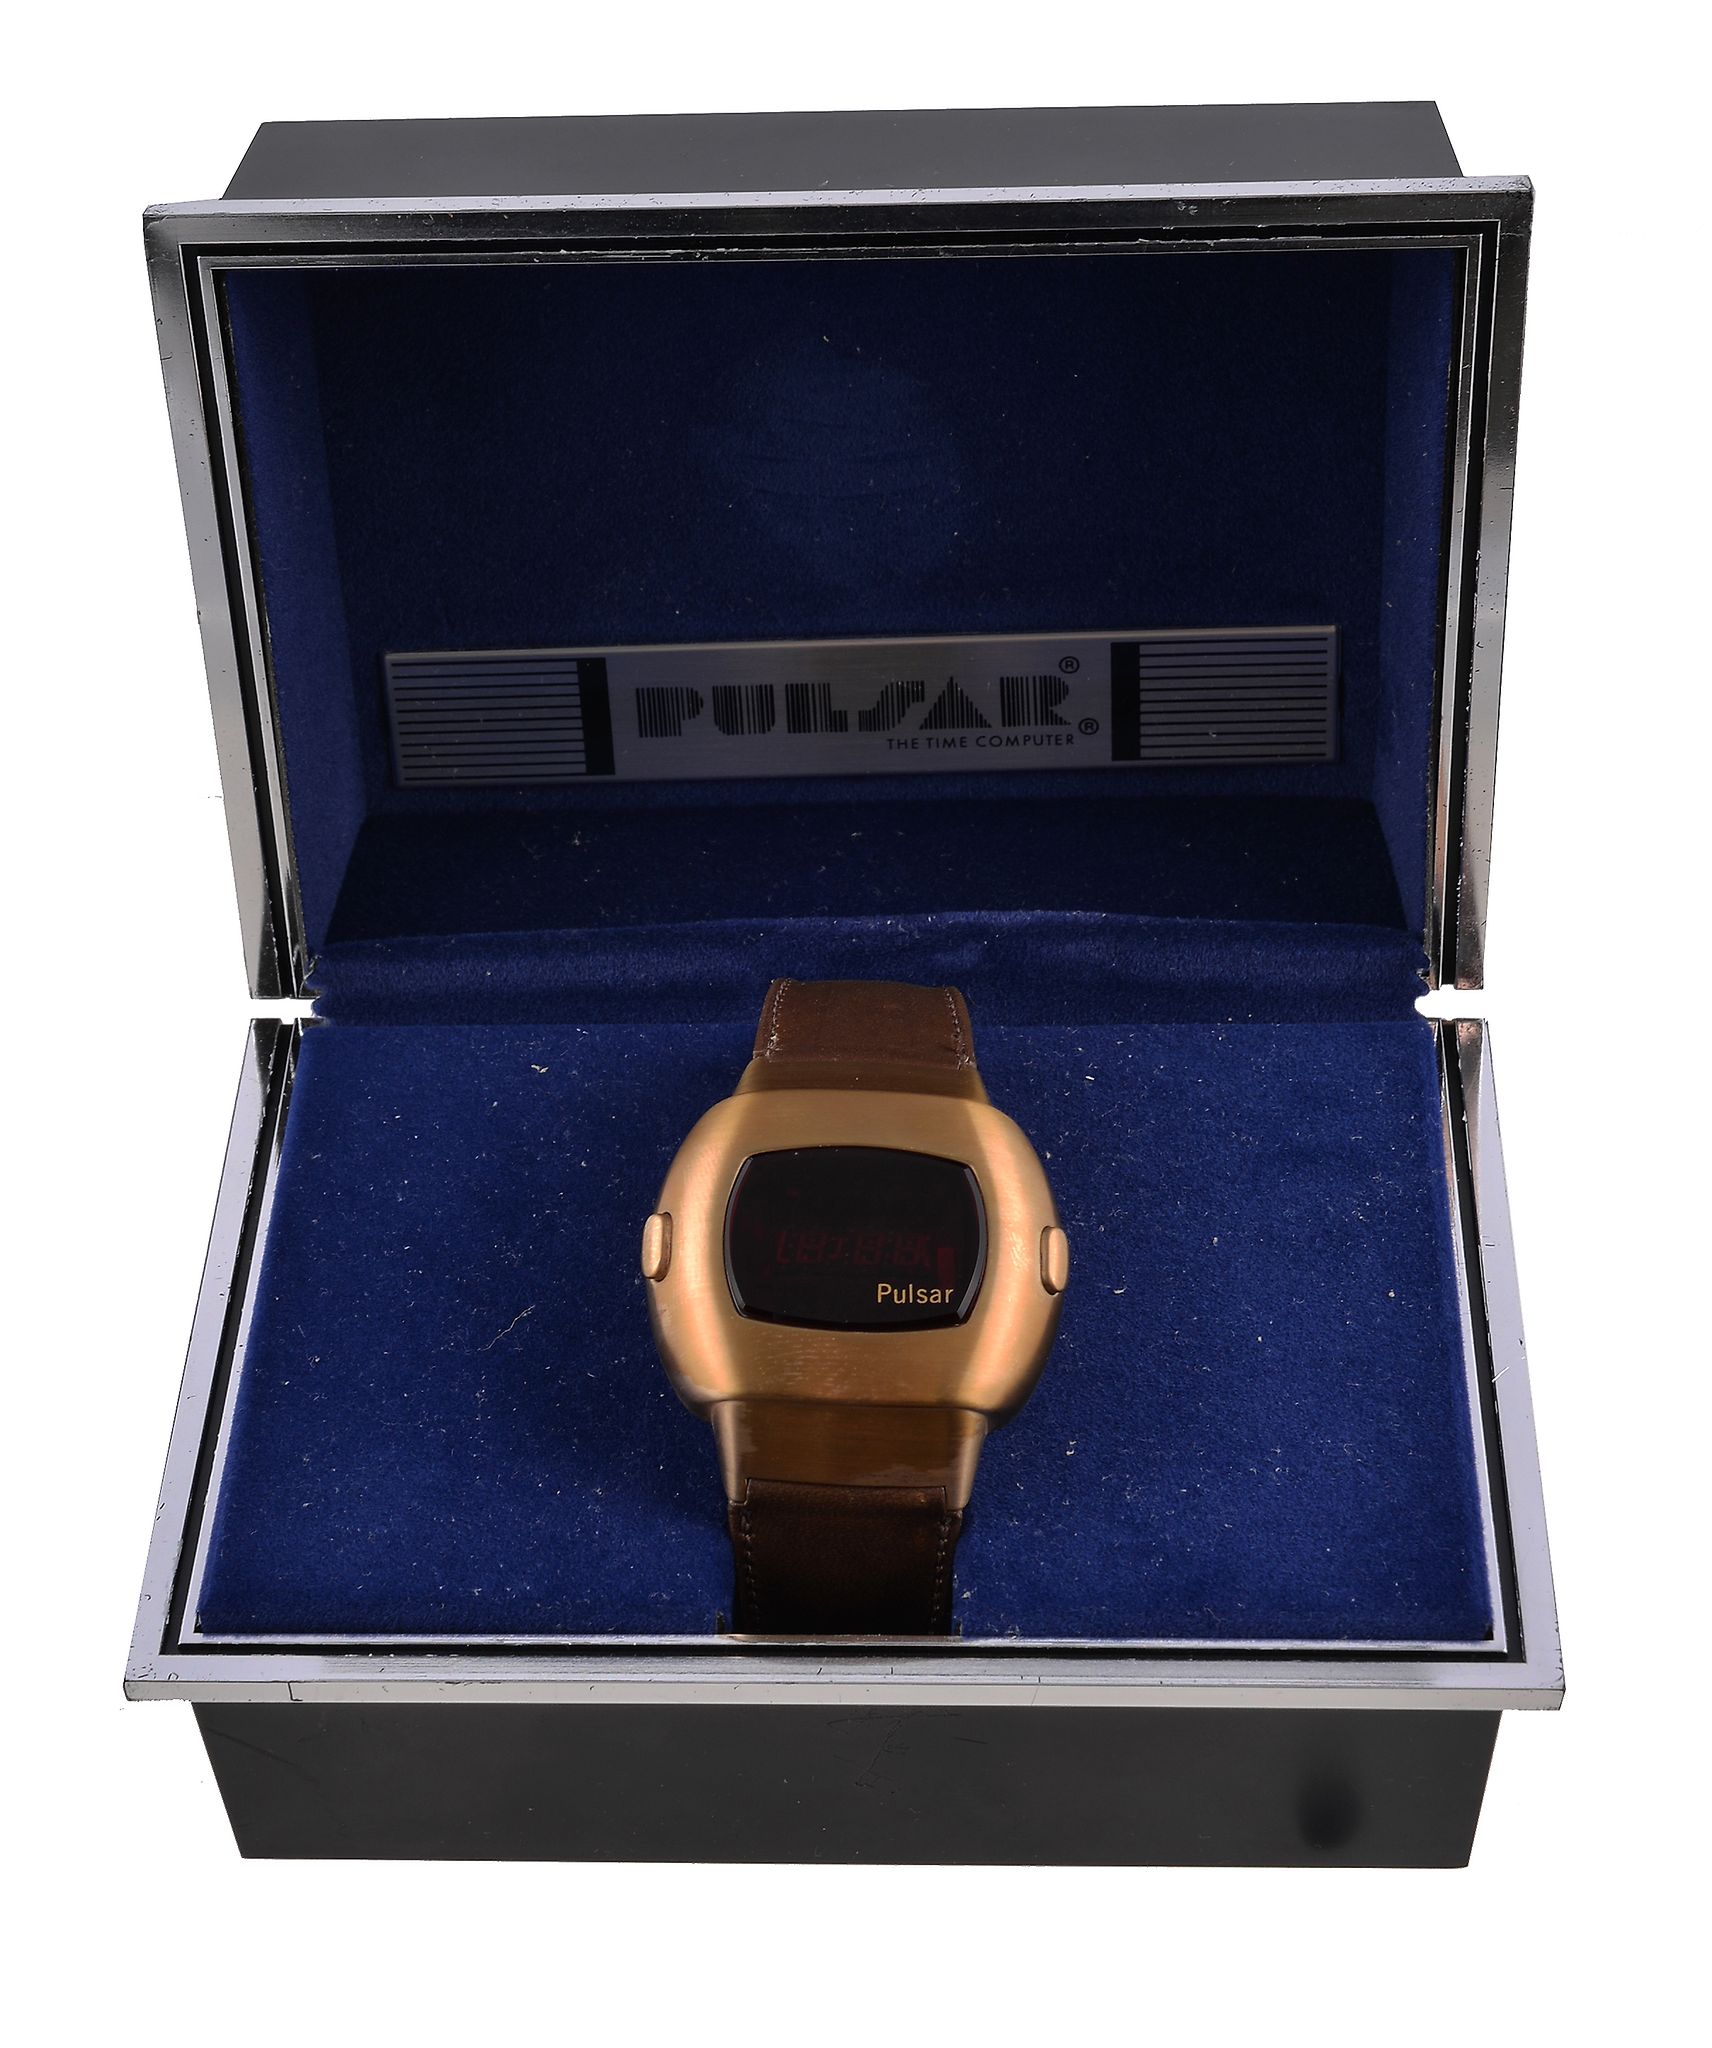 Pulsar, P3 Time Computer, a rare 14 carat gold LED wristwatch, no. 134522, circa 1973, quartz - Image 2 of 2